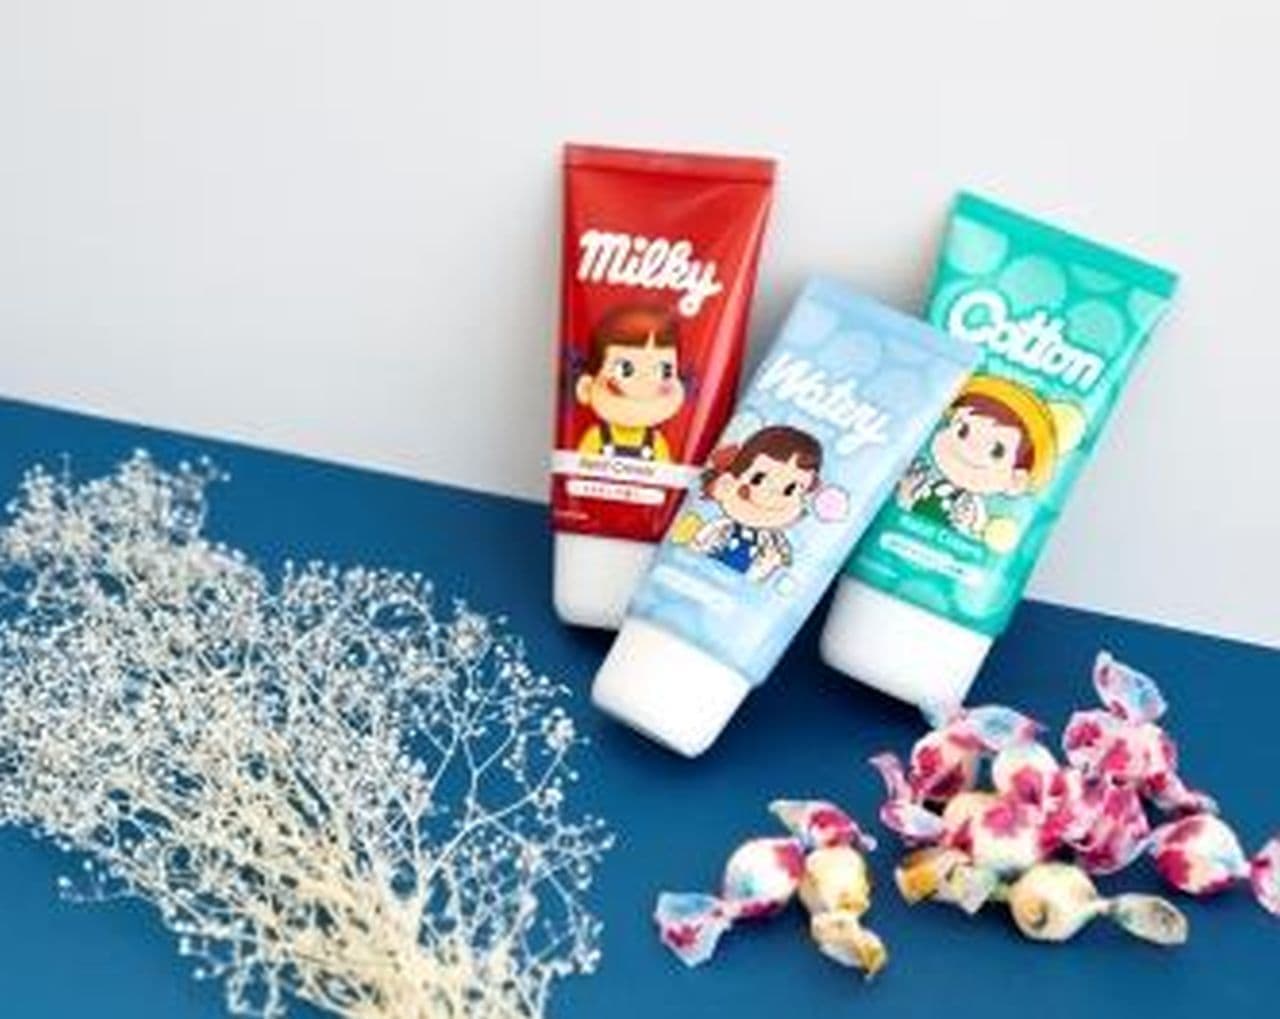 Fujiya and Aqua Shabon collaboration hand cream